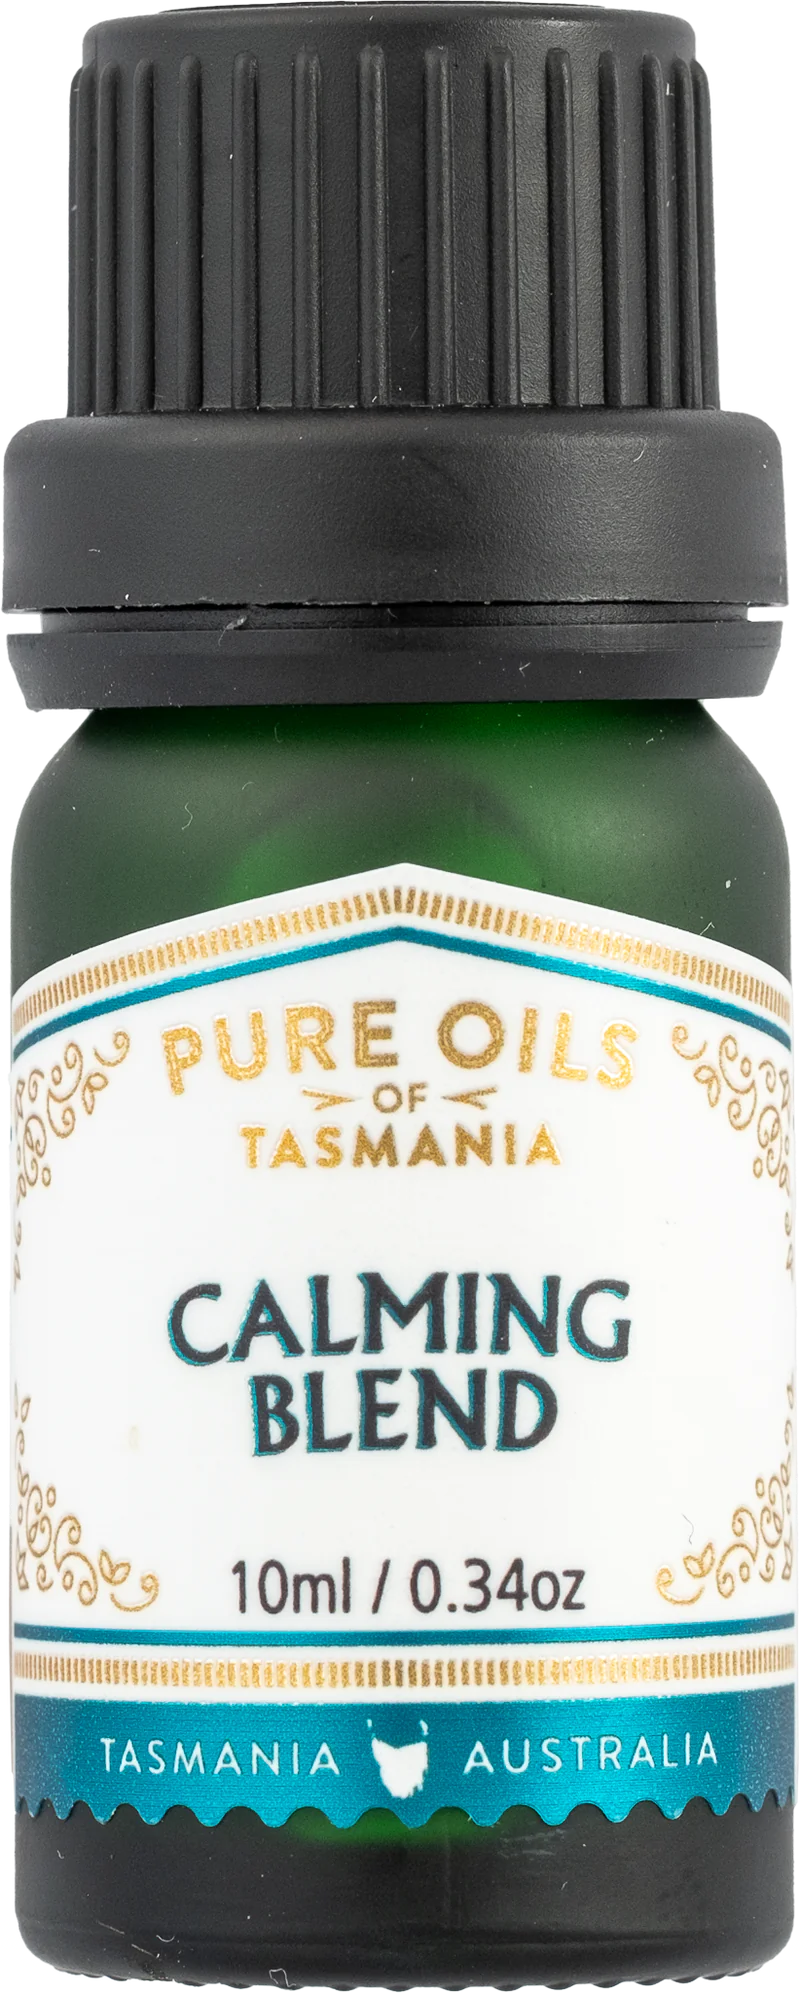 Pure Oil Blends - Pure Oils of Tasmania Body pure oils tasmania Calming Blend 